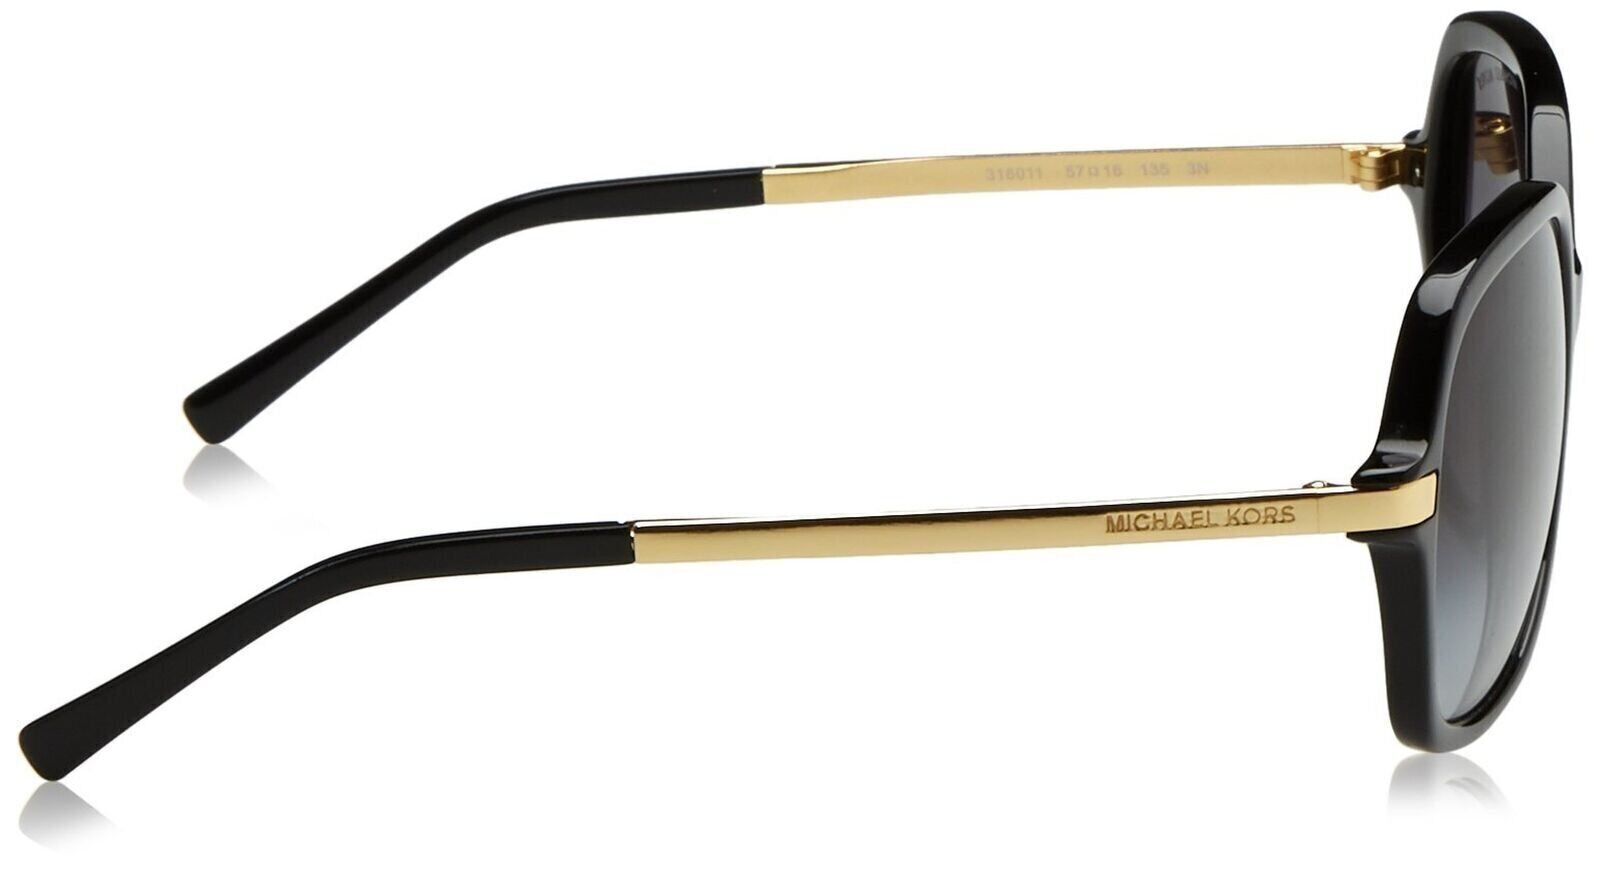 Michael Kors ADRIANNA II MK2024 Sunglasses 316011-57 Black Frame,